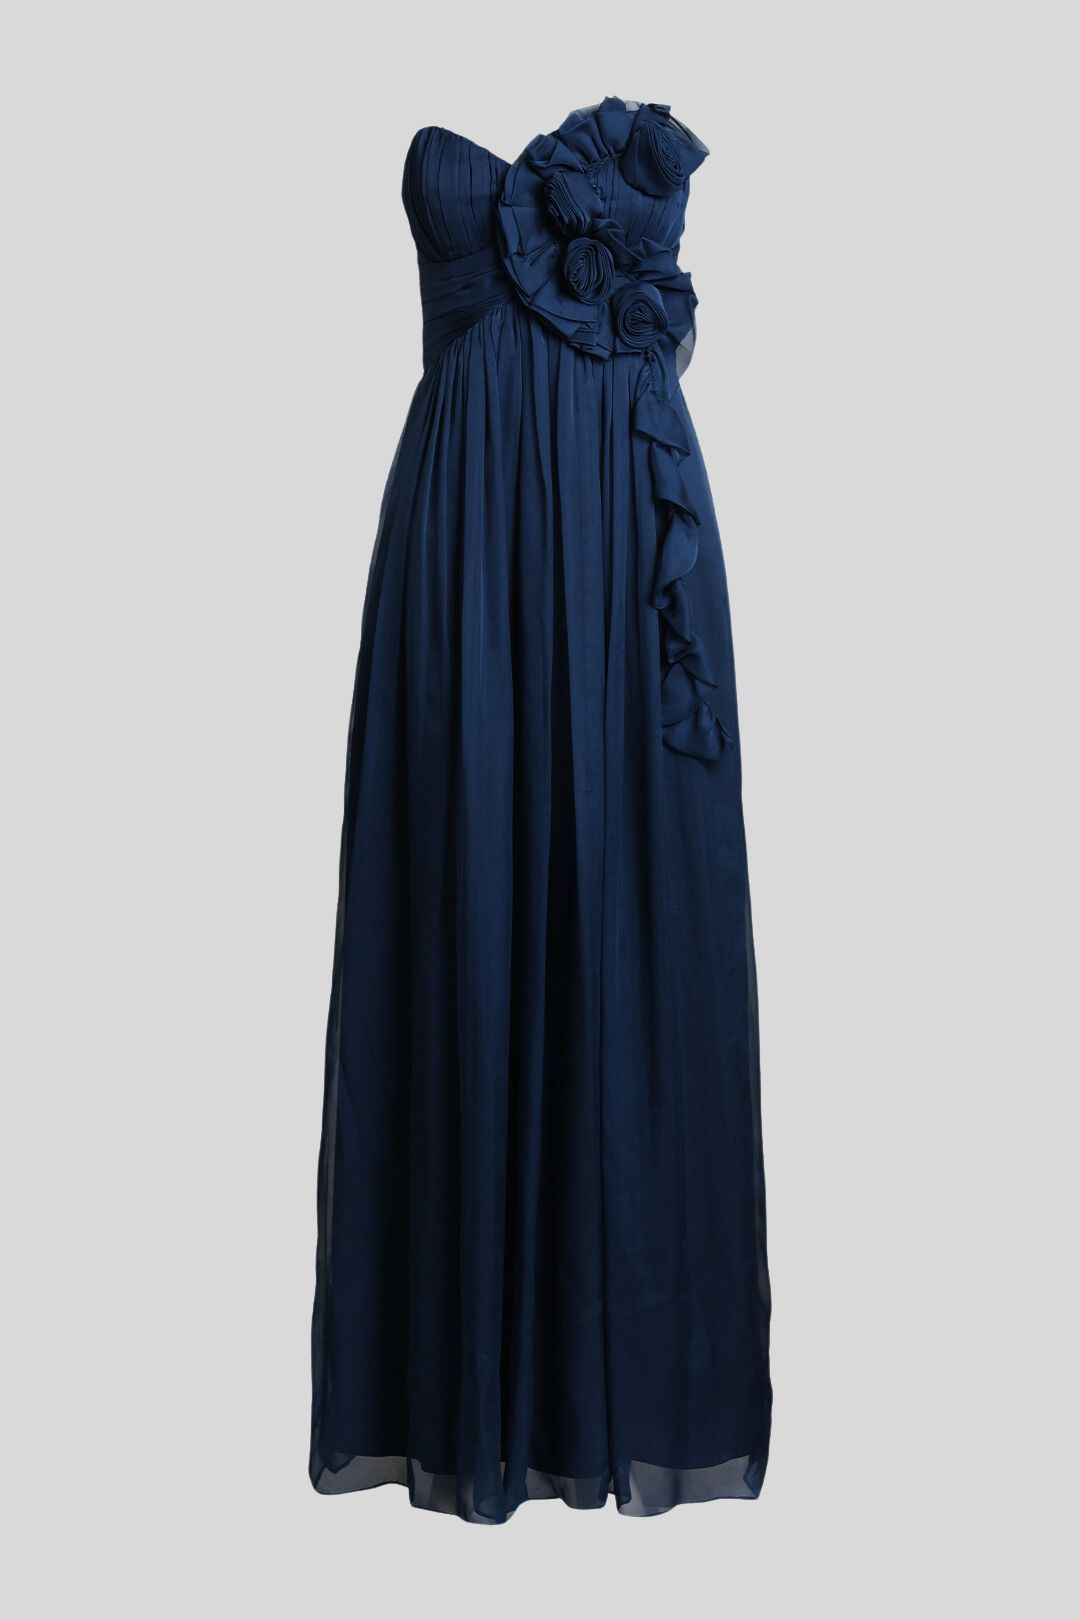 Bariano Blue Strapless Sweetheart Neckline Formal Dress